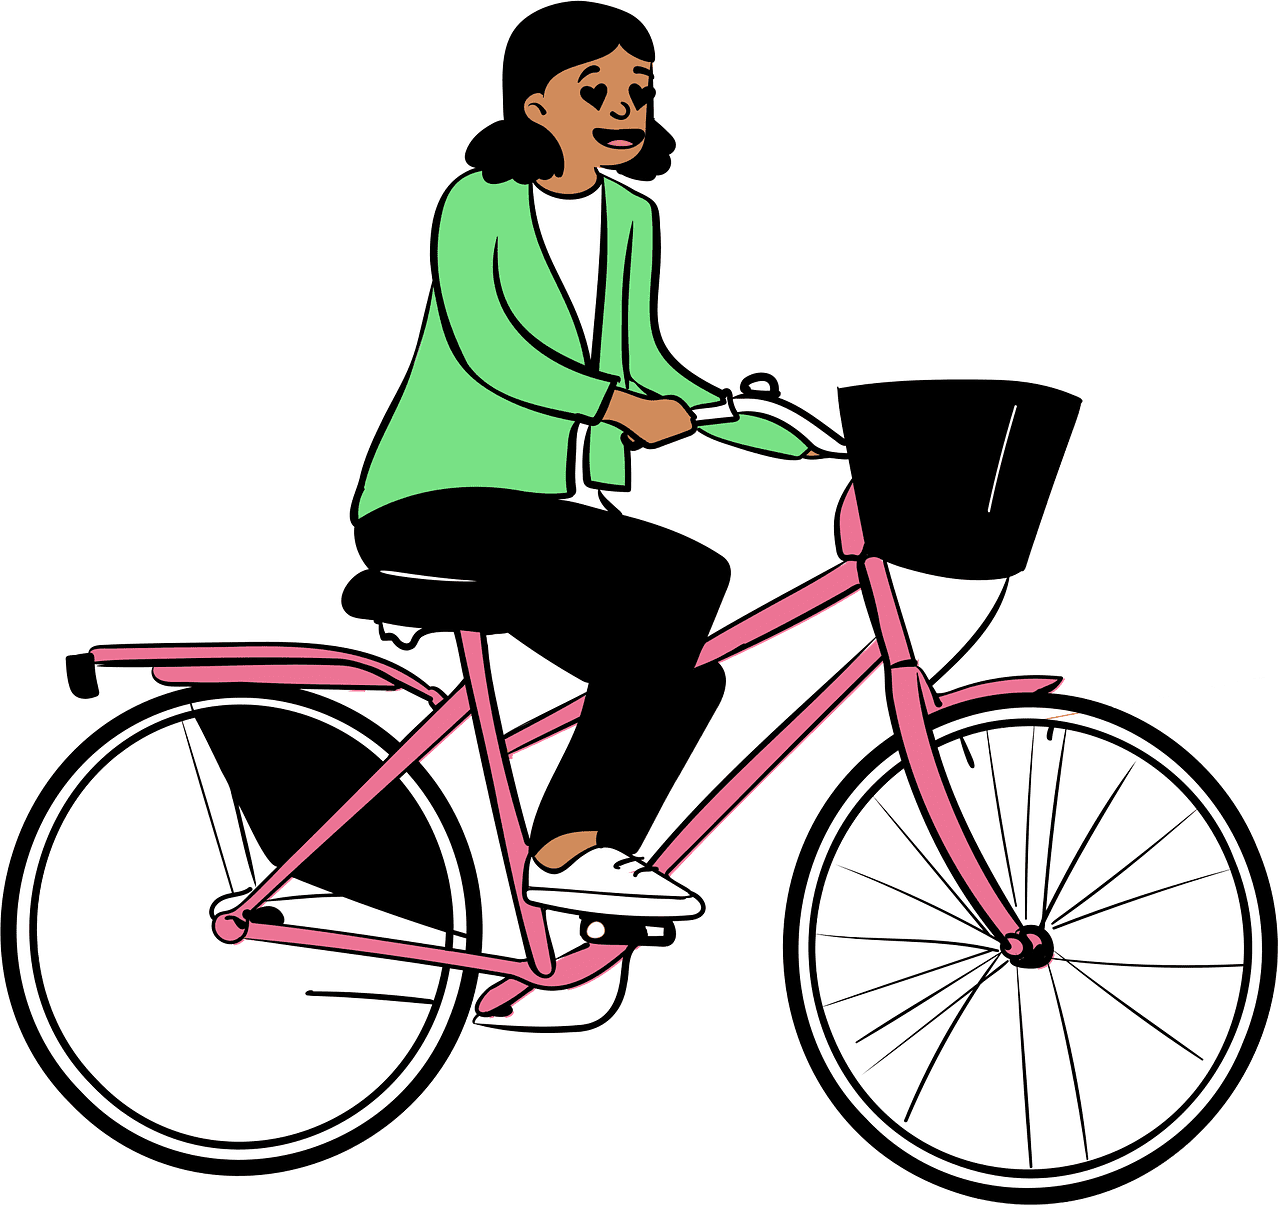 Woman Riding Bike clipart images